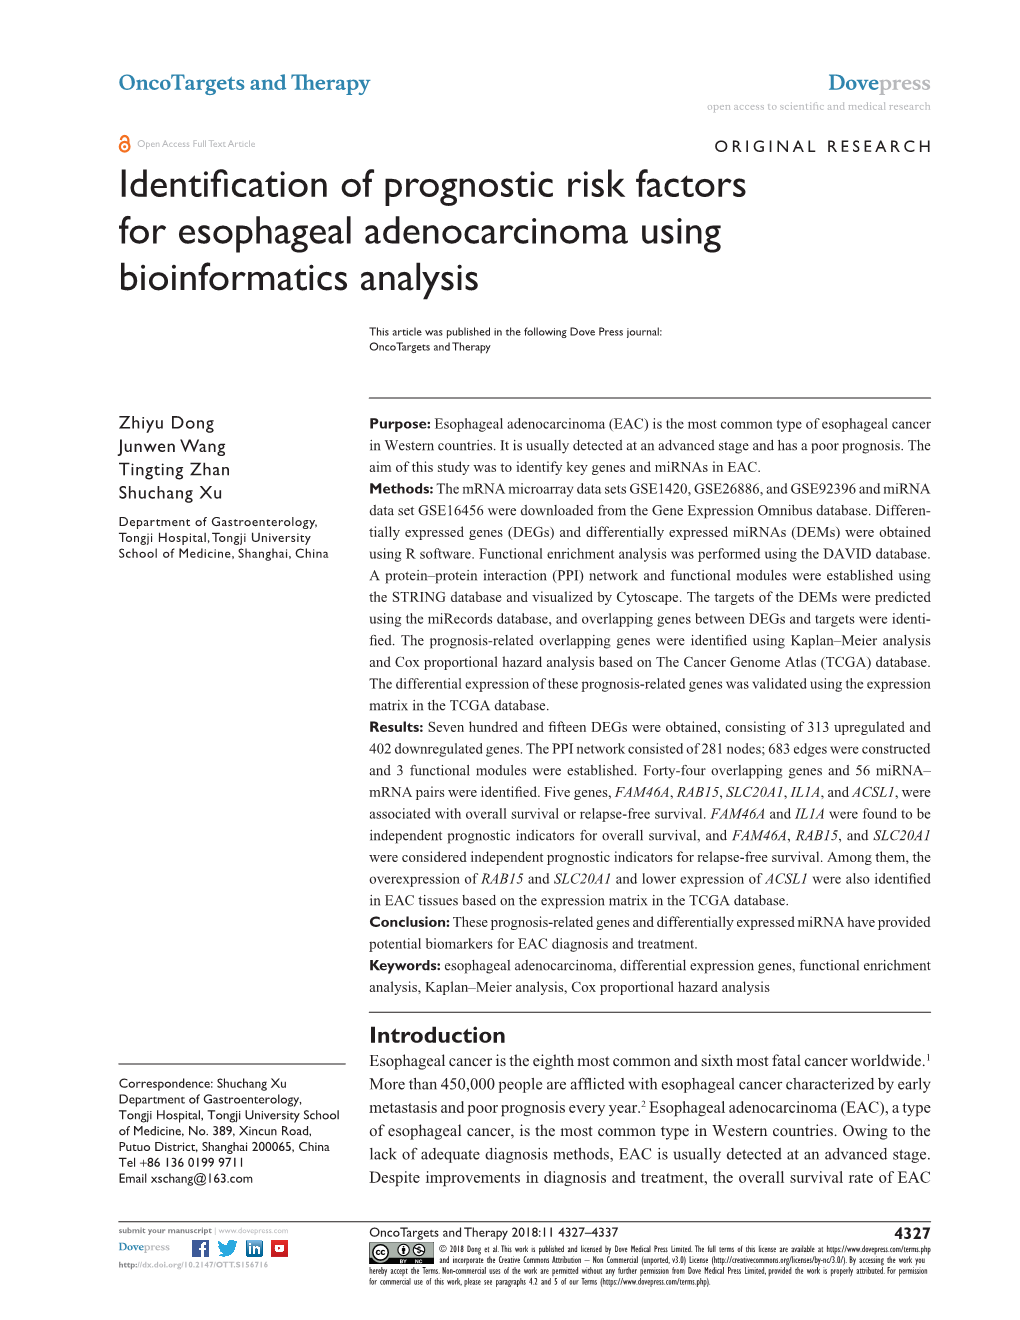 Identification of Prognostic Risk Factors for Esophageal Adenocarcinoma Using Bioinformatics Analysis